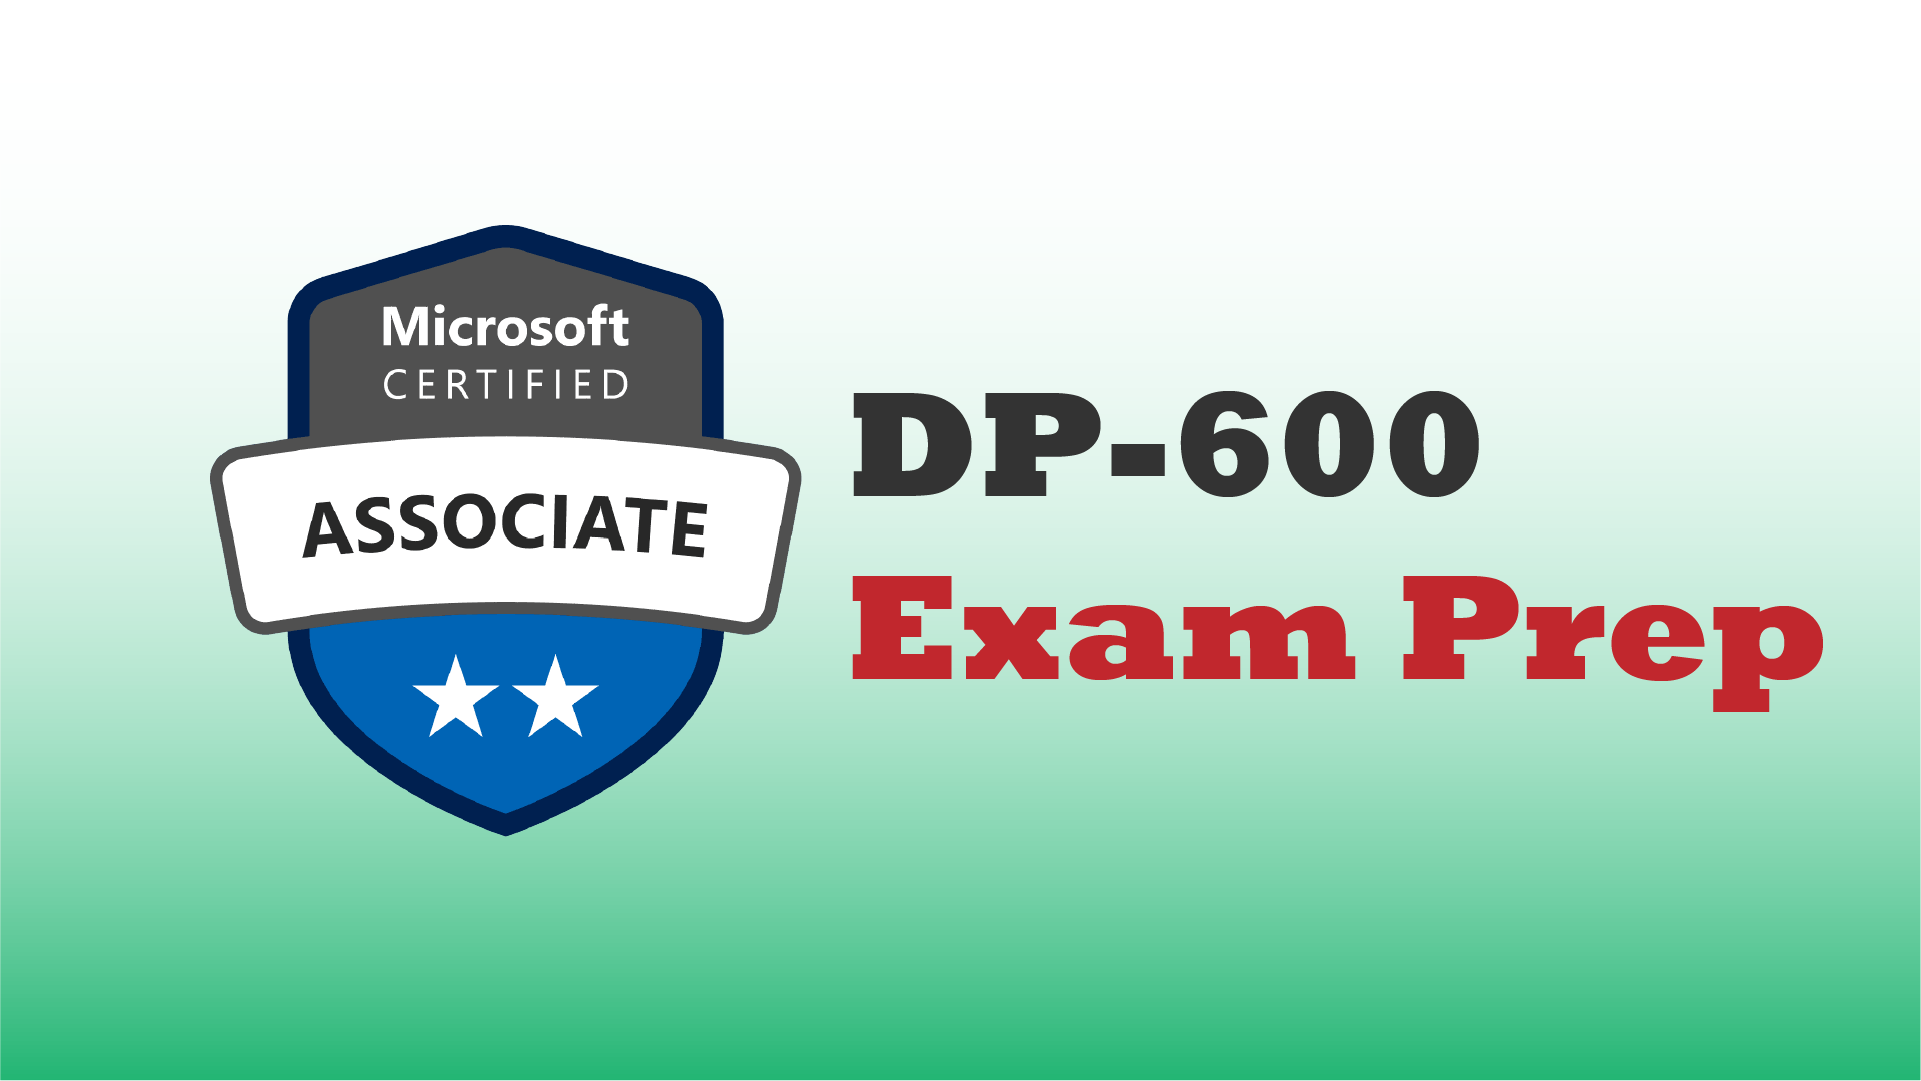 Microsoft Fabric DP-600 Exam Prep Resources